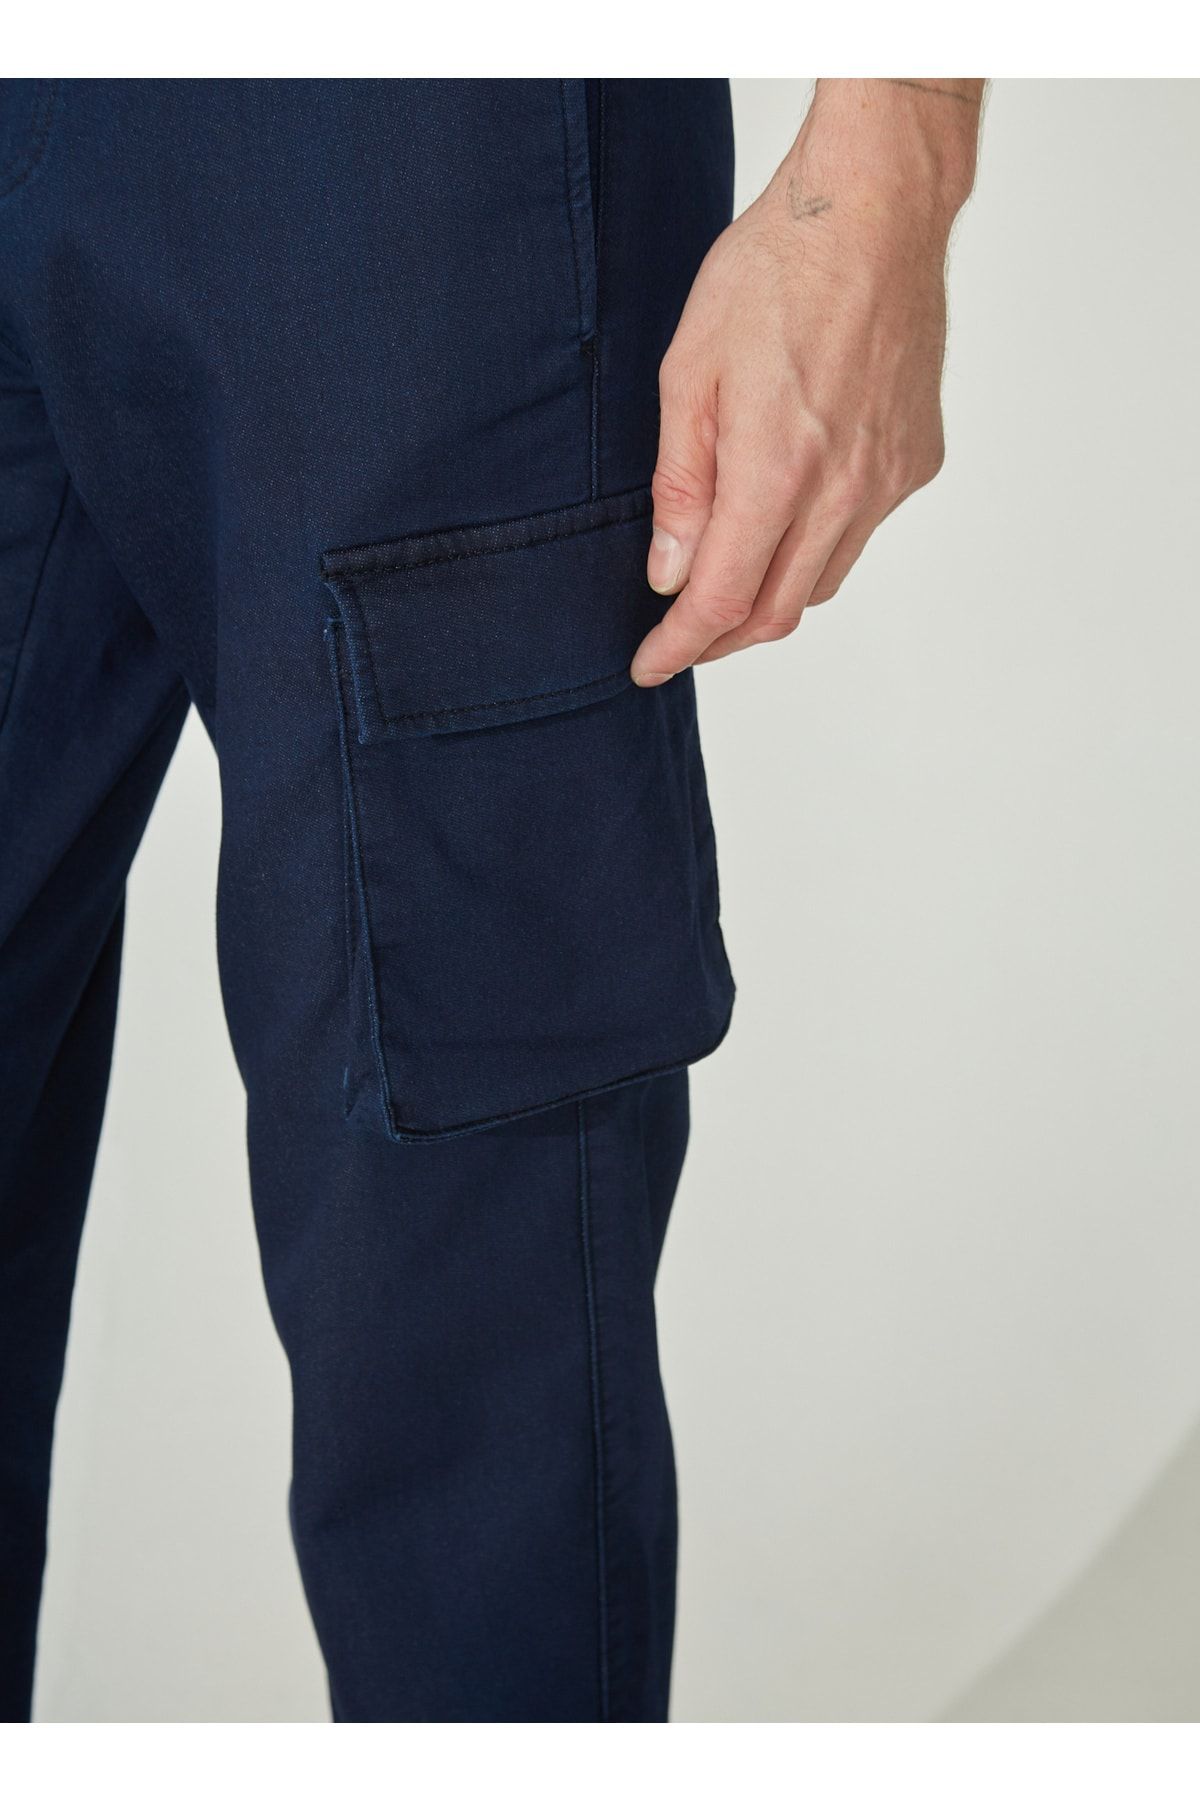 Fabrika شلوار جین مردانه آبی سرمه ای با ساق کم کمر باریک معمولی FAB 63